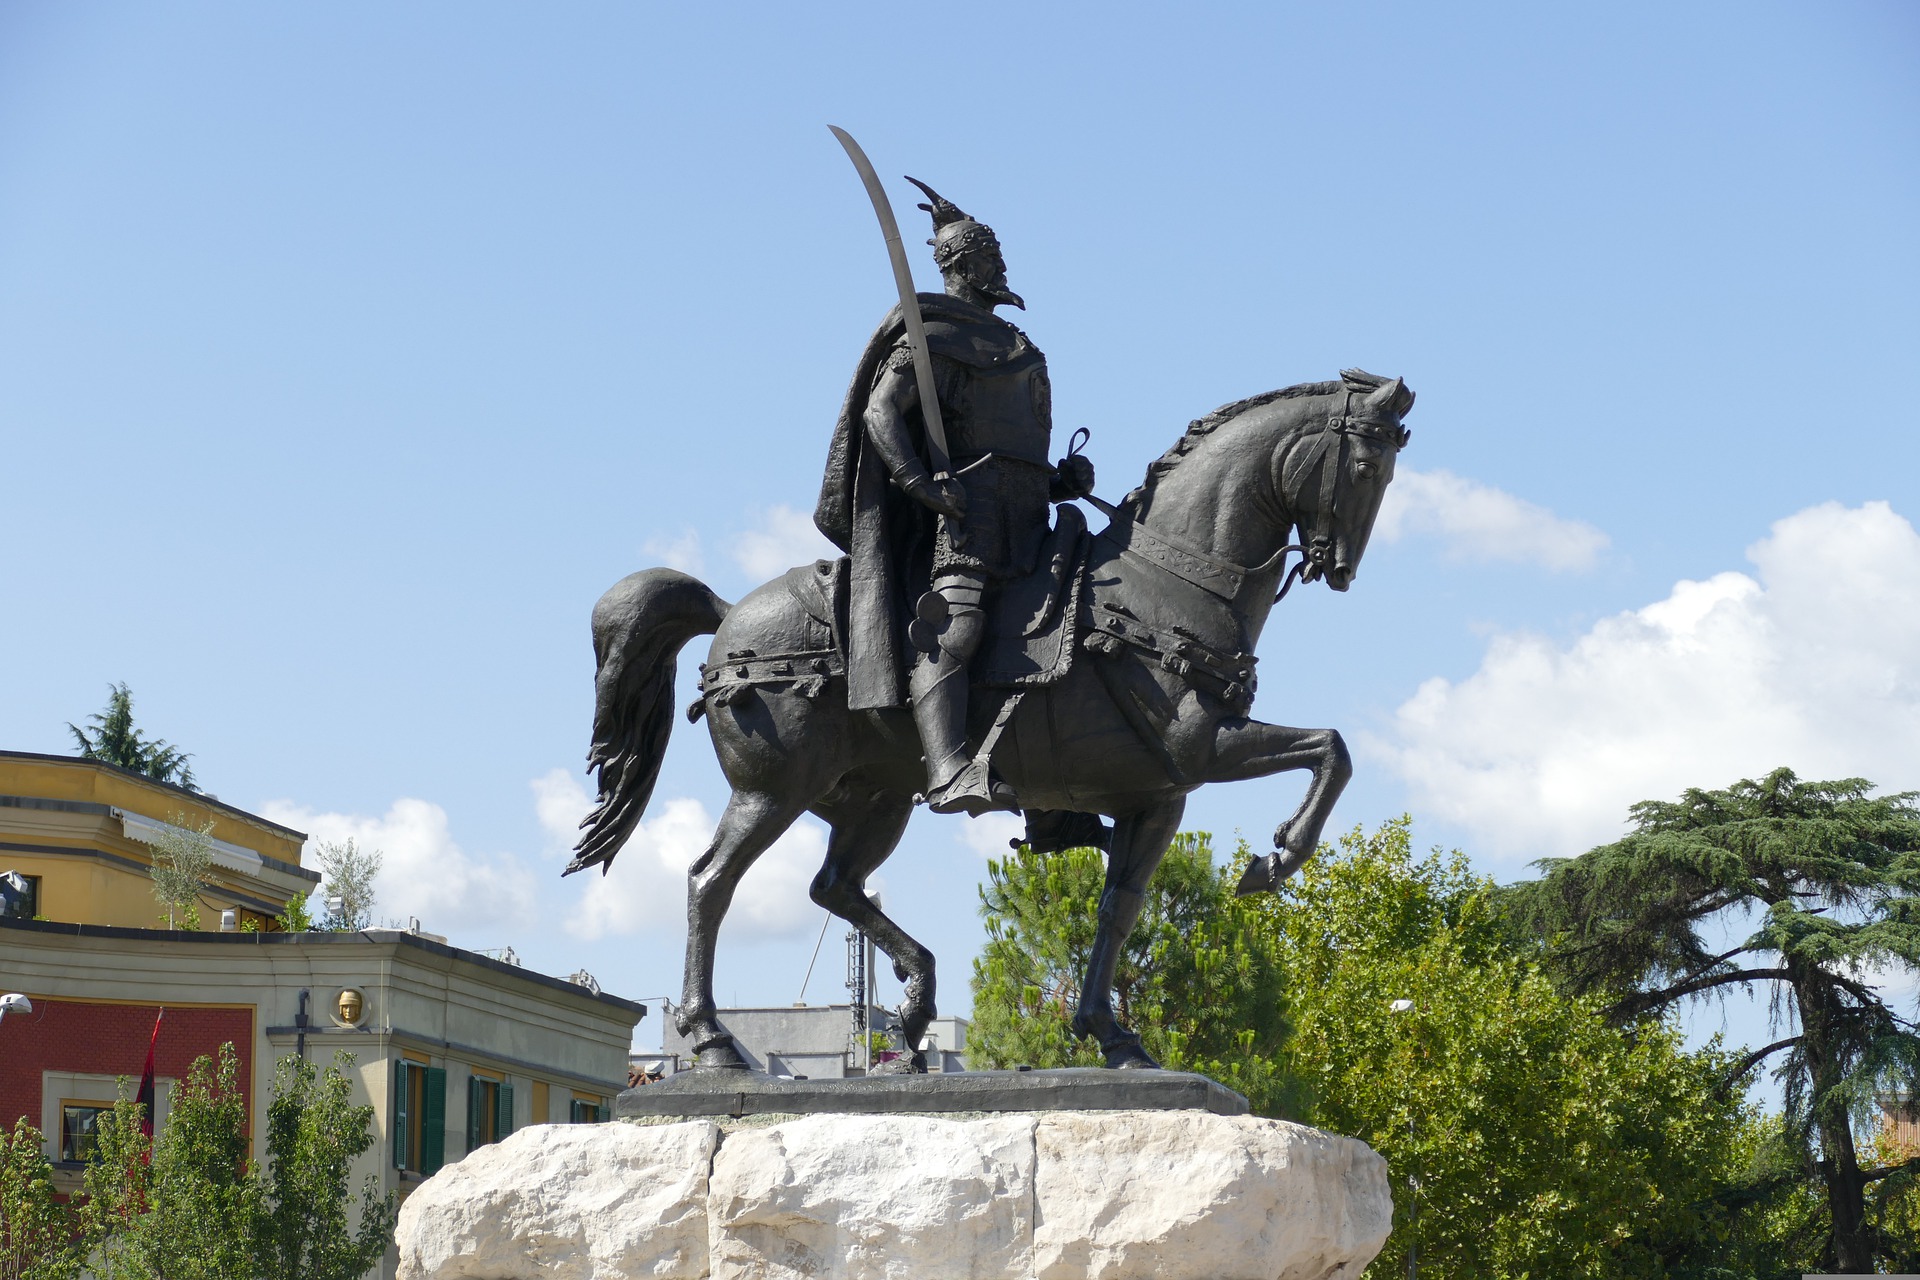 Statue of Albanian hero Skenderbeg on a horse